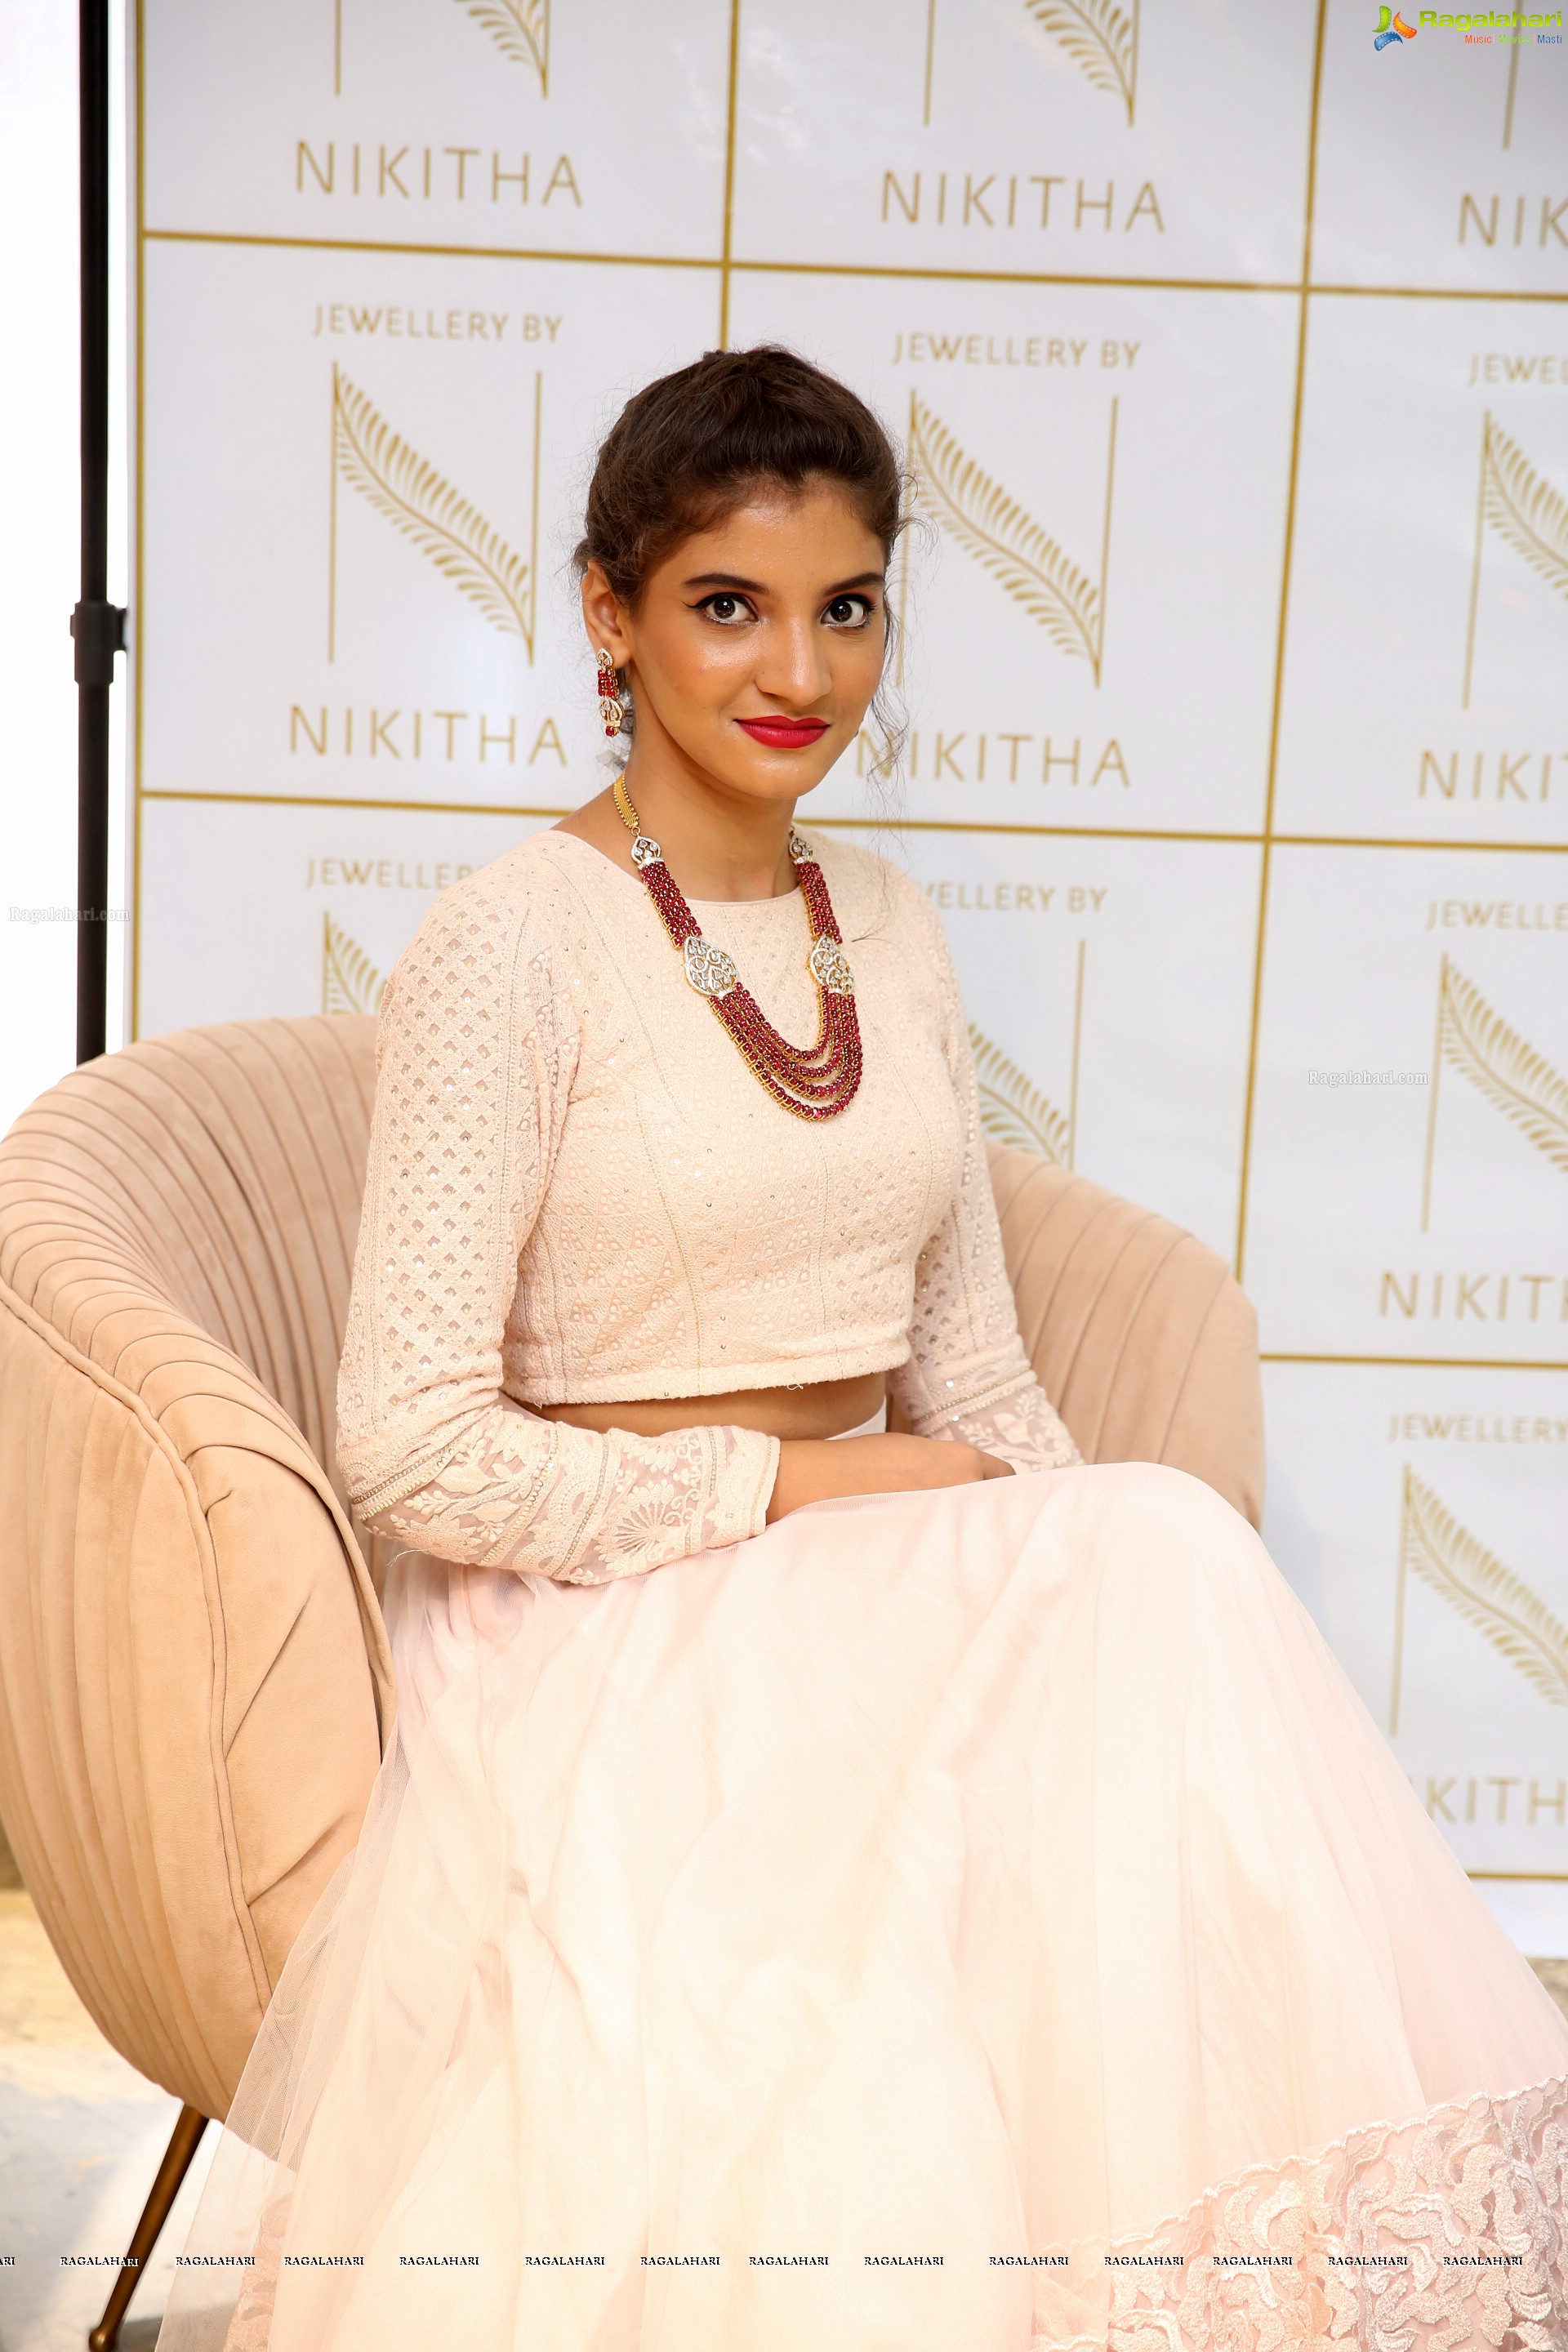 Shivani Vij (High definition) @ Nikitha Jewellery - The 9 Shades of Women